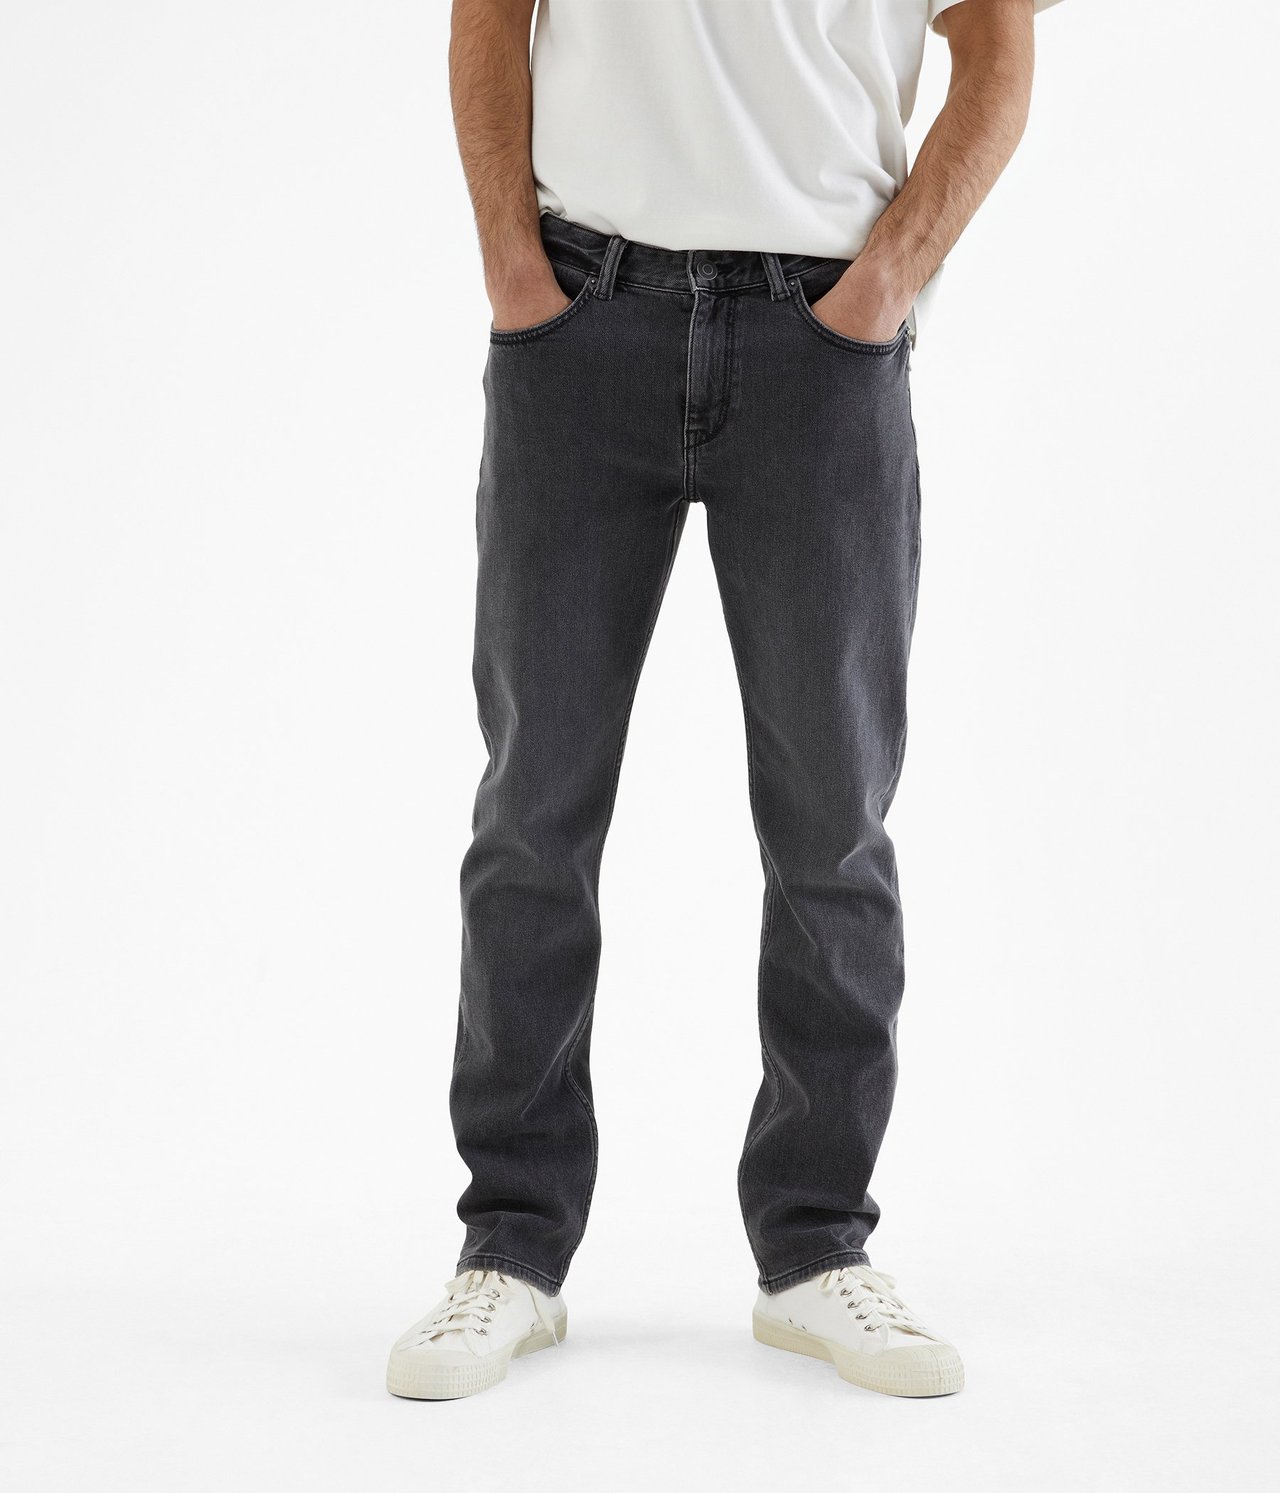 Hank regular jeans - Silvergrå - 187cm / Storlek: 33/34 - 1